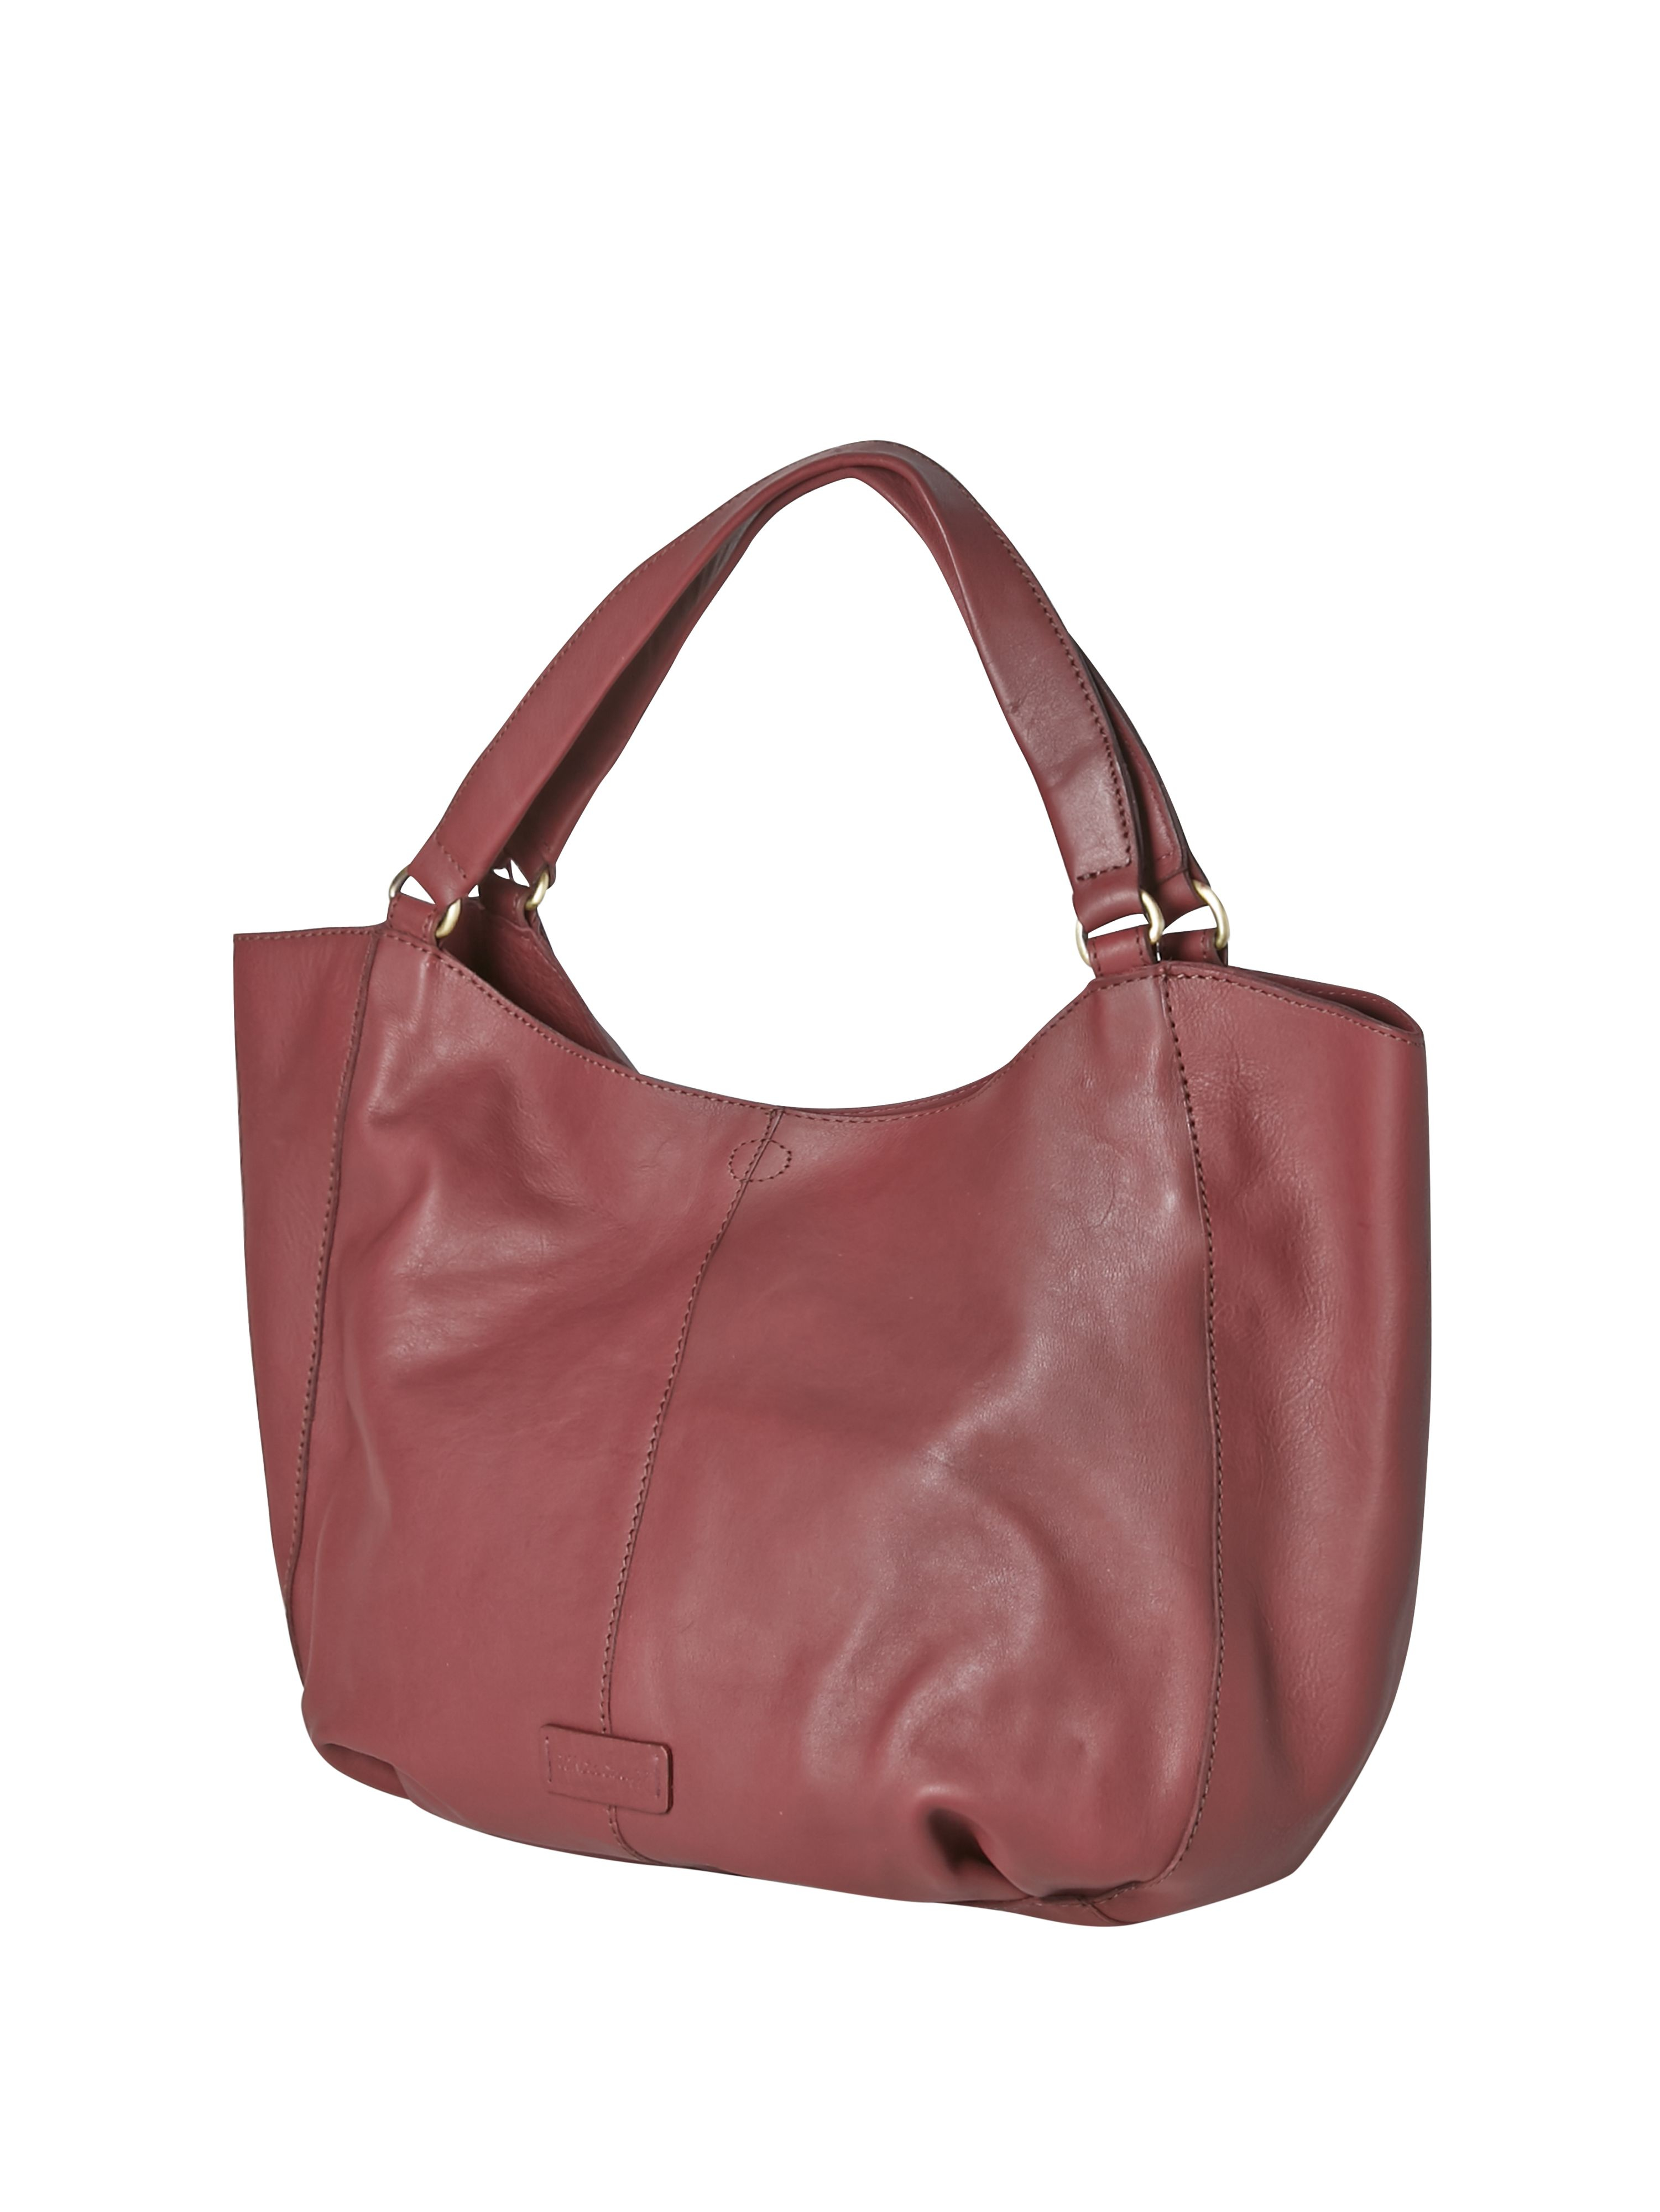 White Stuff Leather Geneva Hobo Bag in Red - Lyst